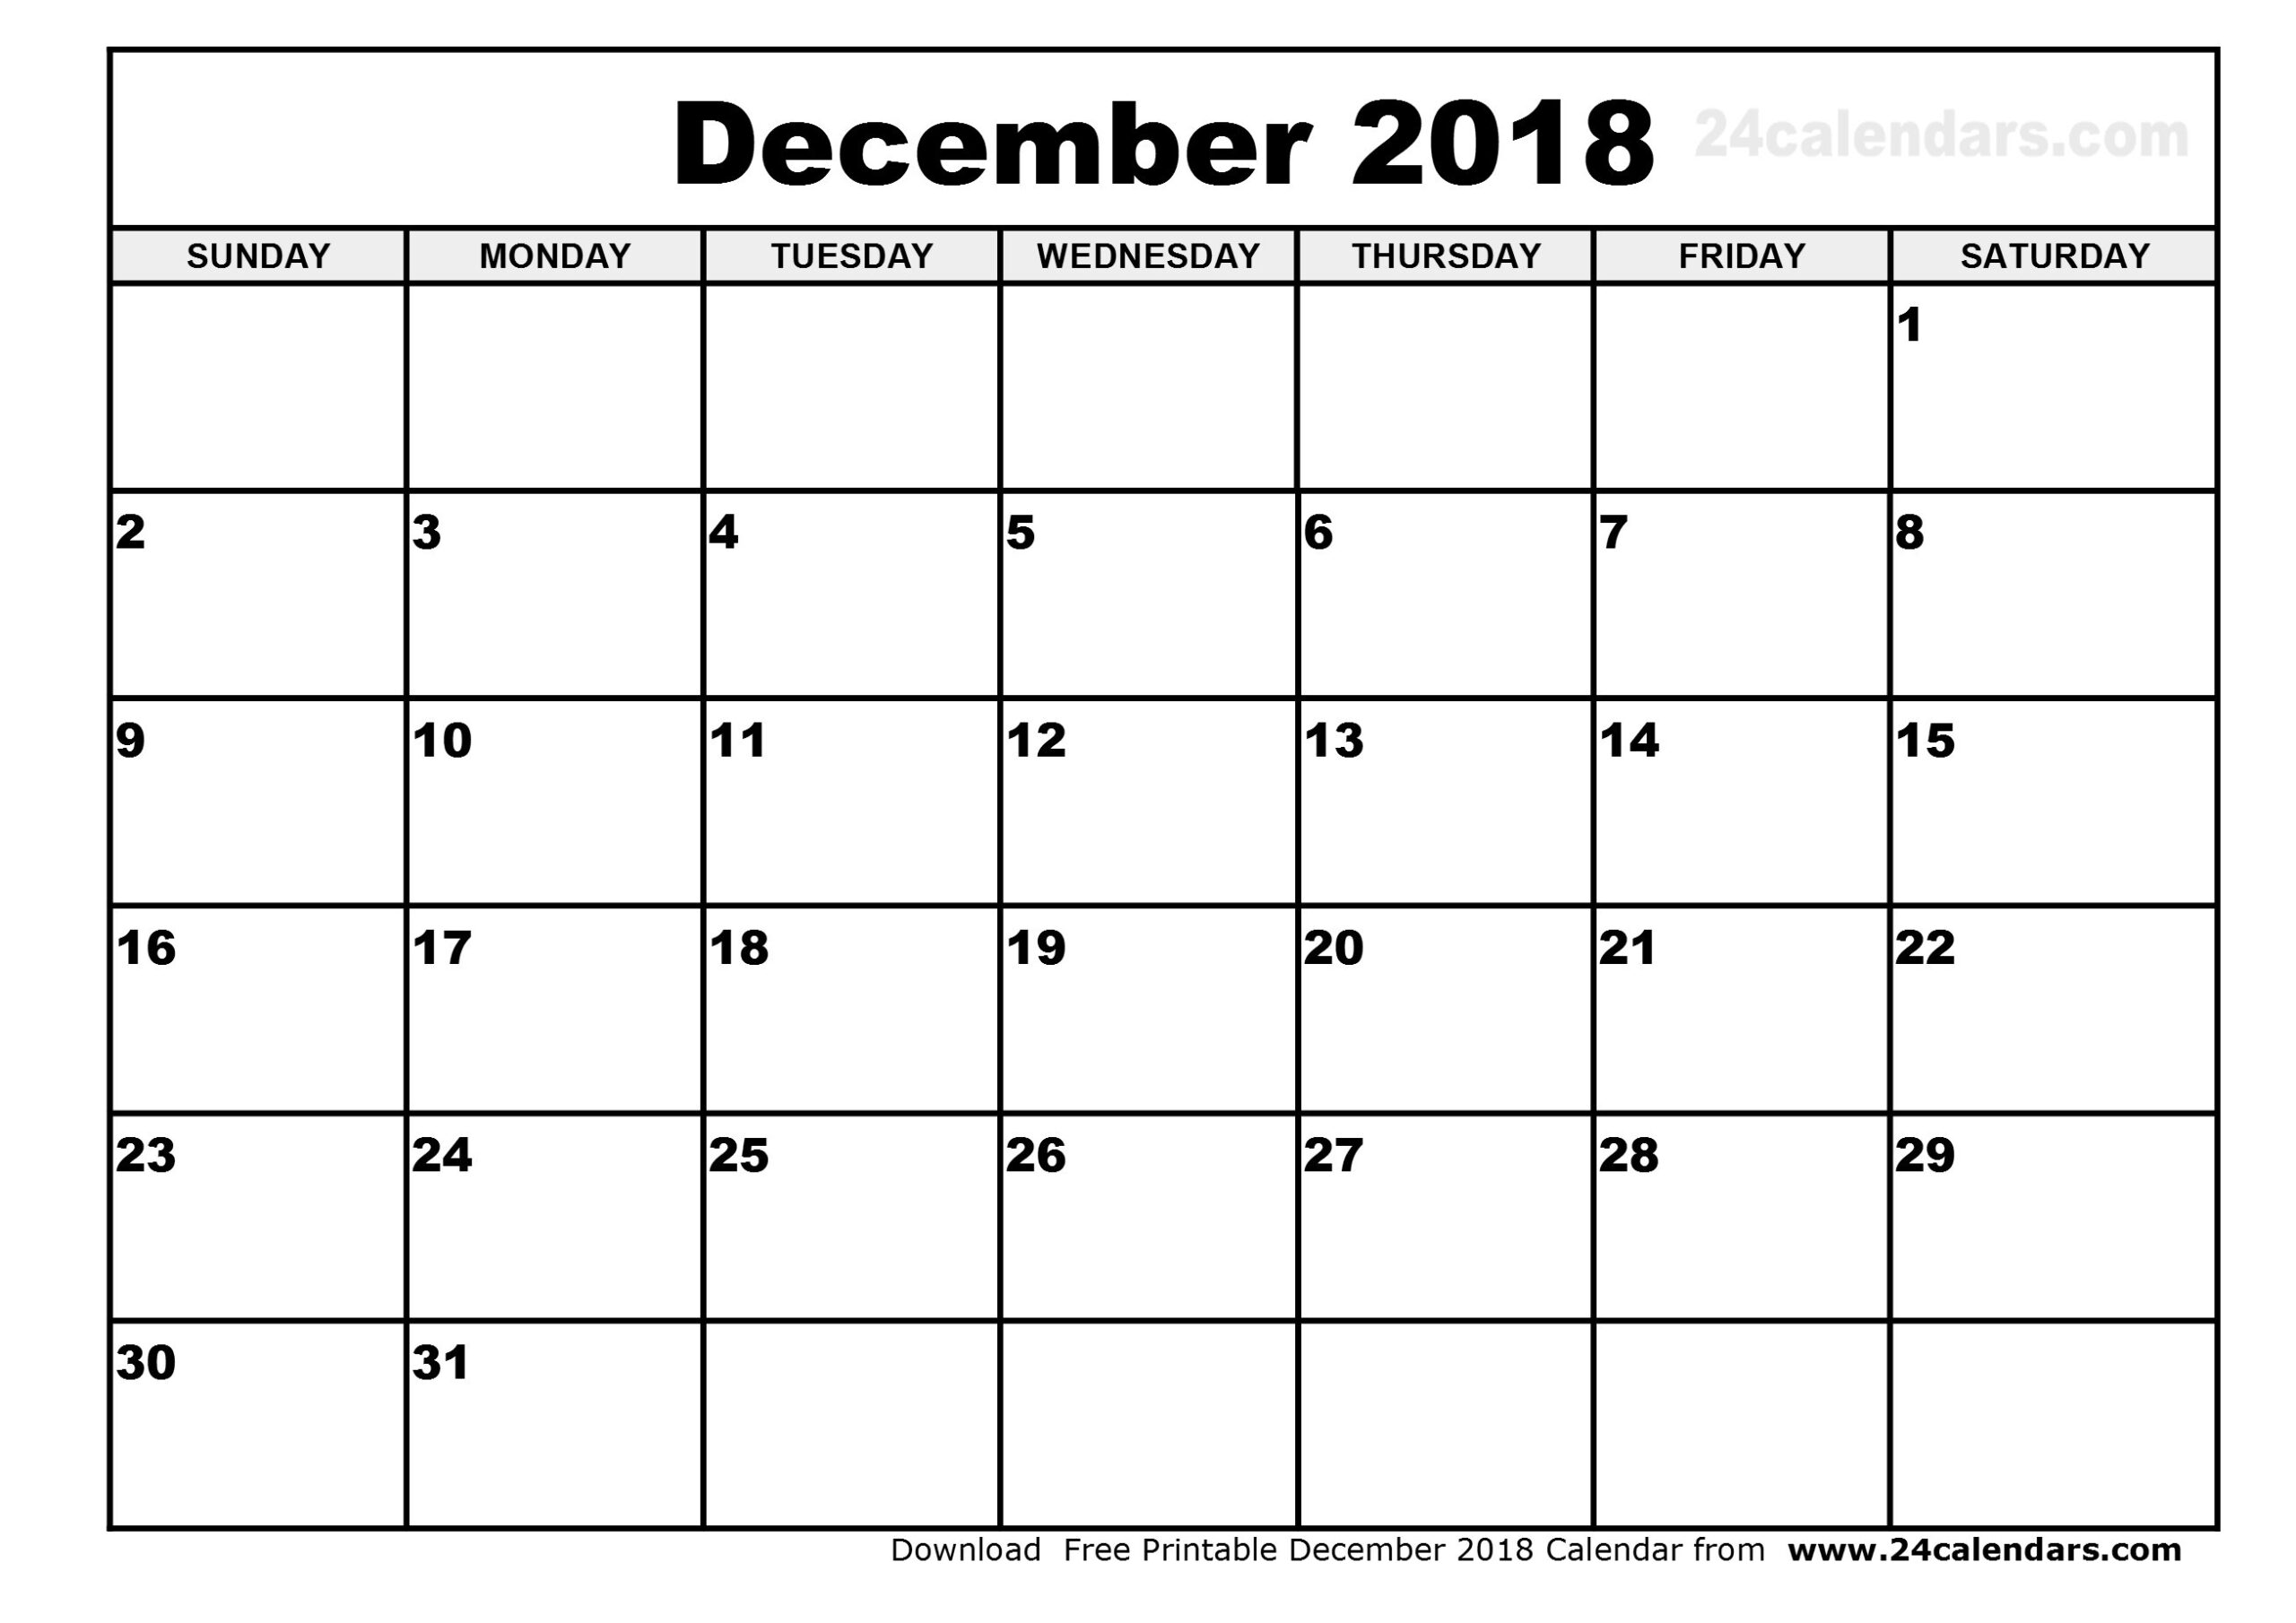 Monthly Calendars Monday Through Friday - Calendar